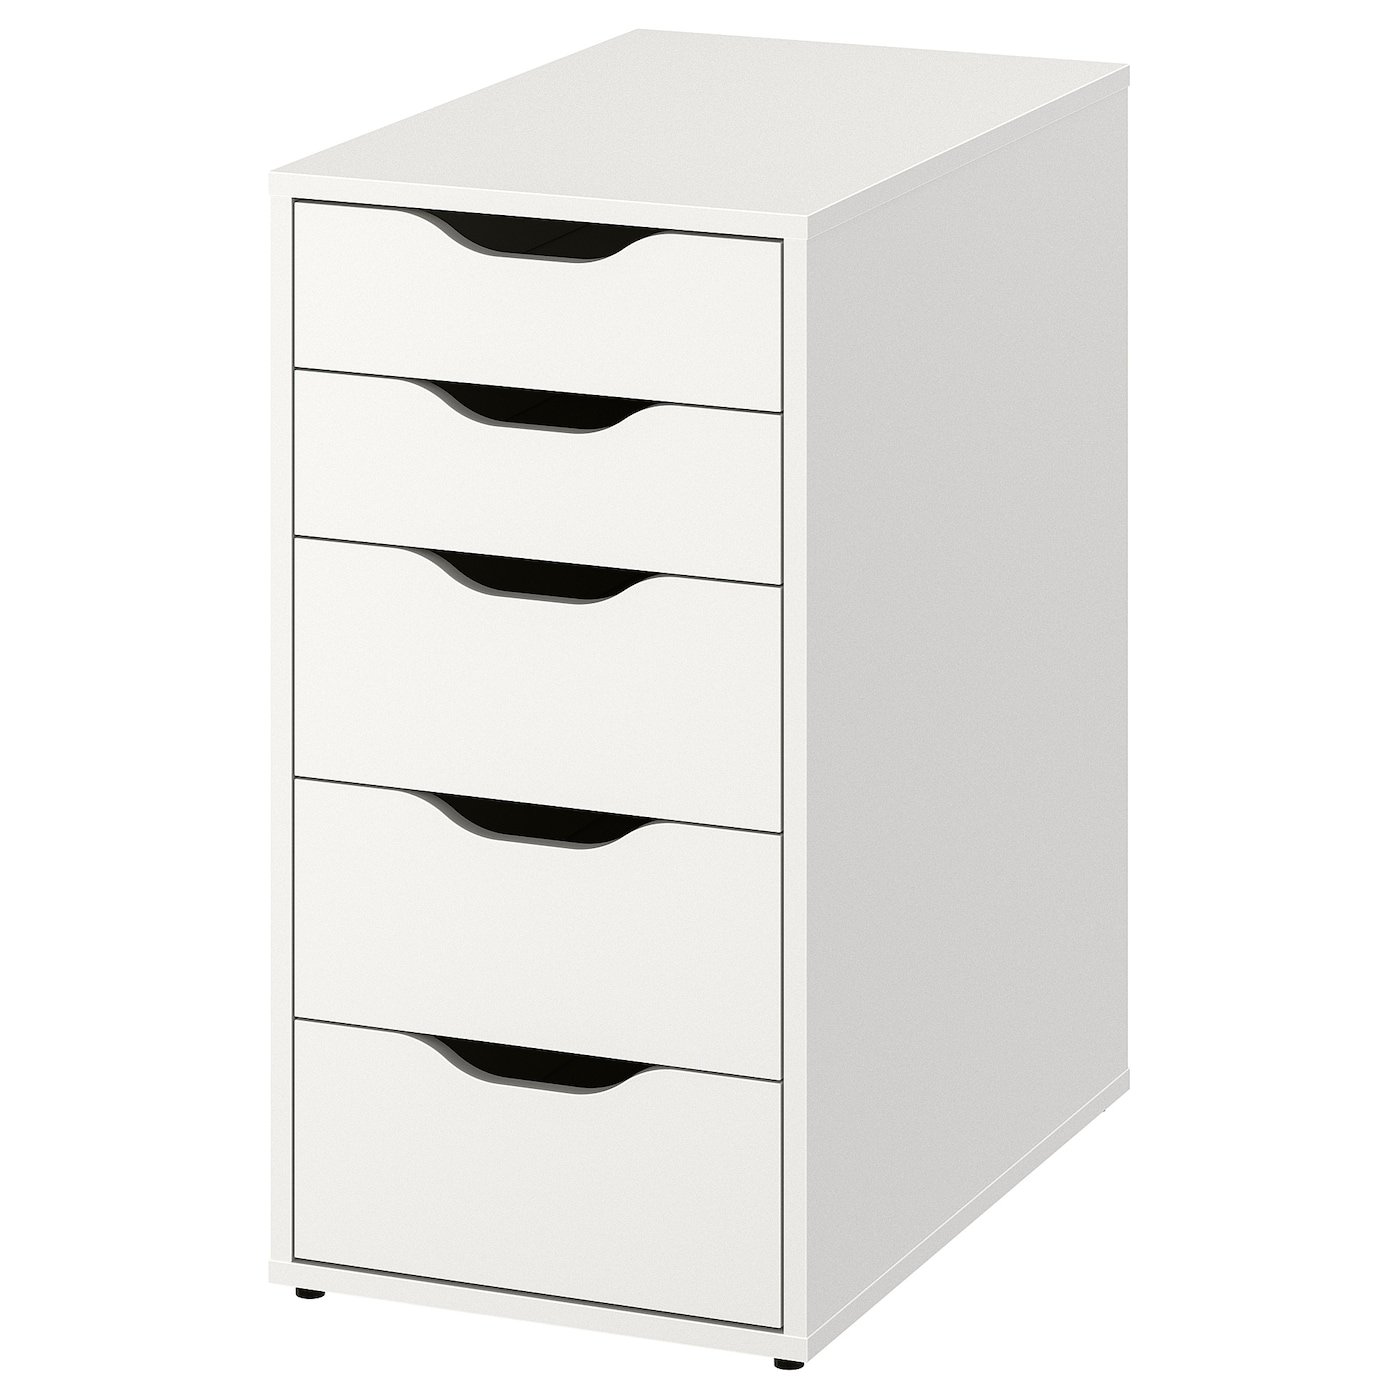 ALEX - drawer unit, white